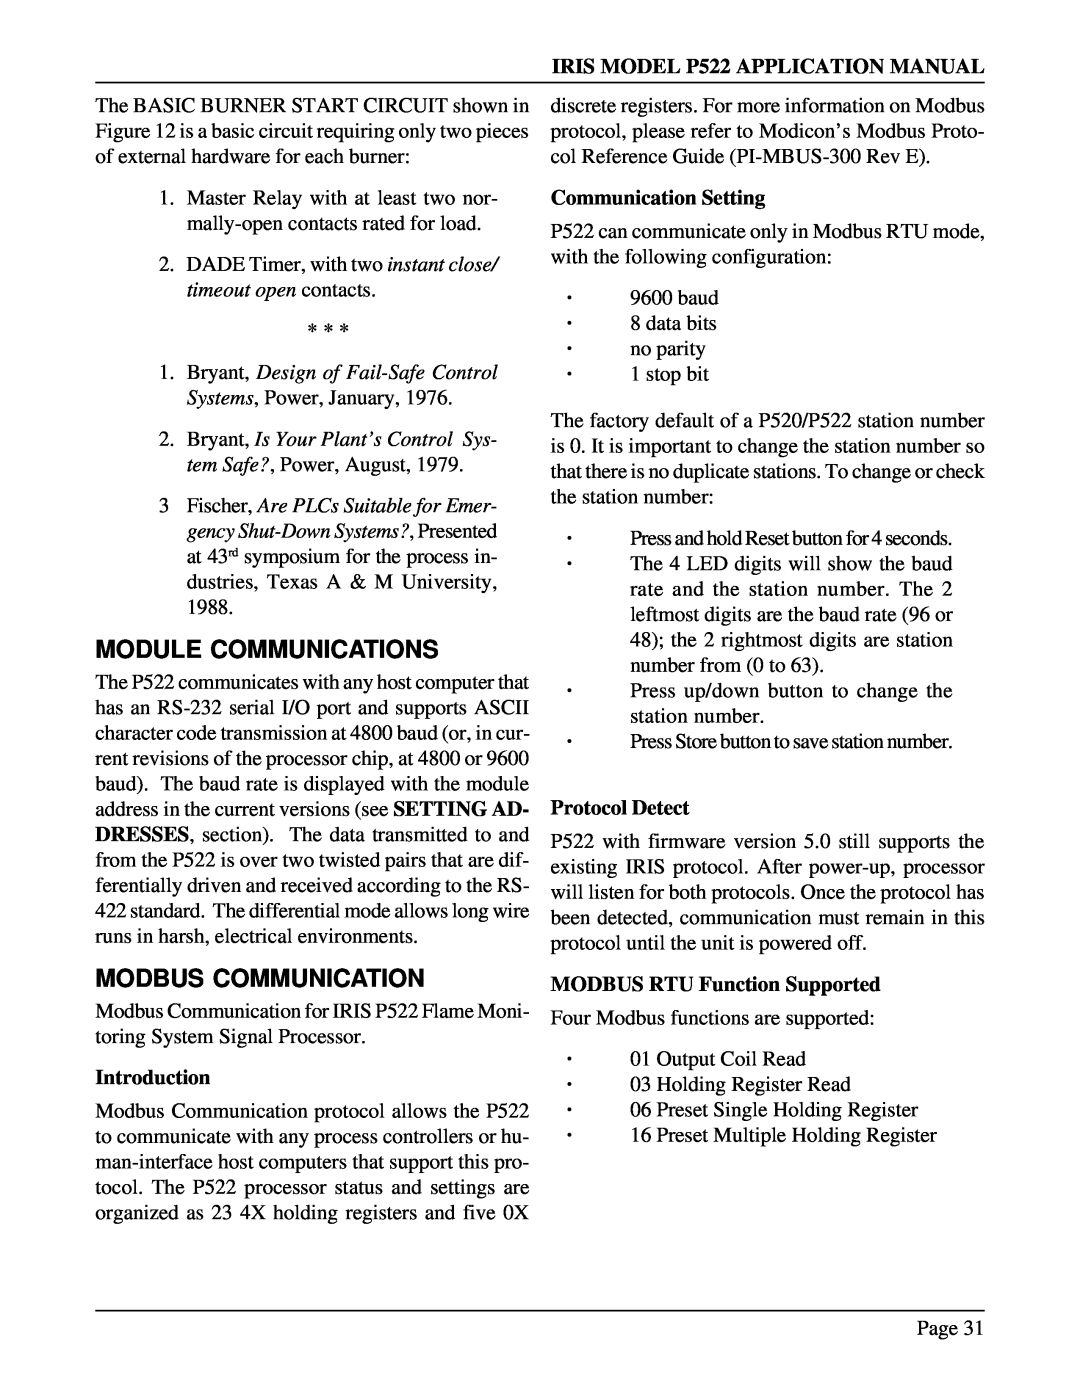 IRIS P522 manual Module Communications, Modbus Communication, Introduction, Communication Setting, Protocol Detect 